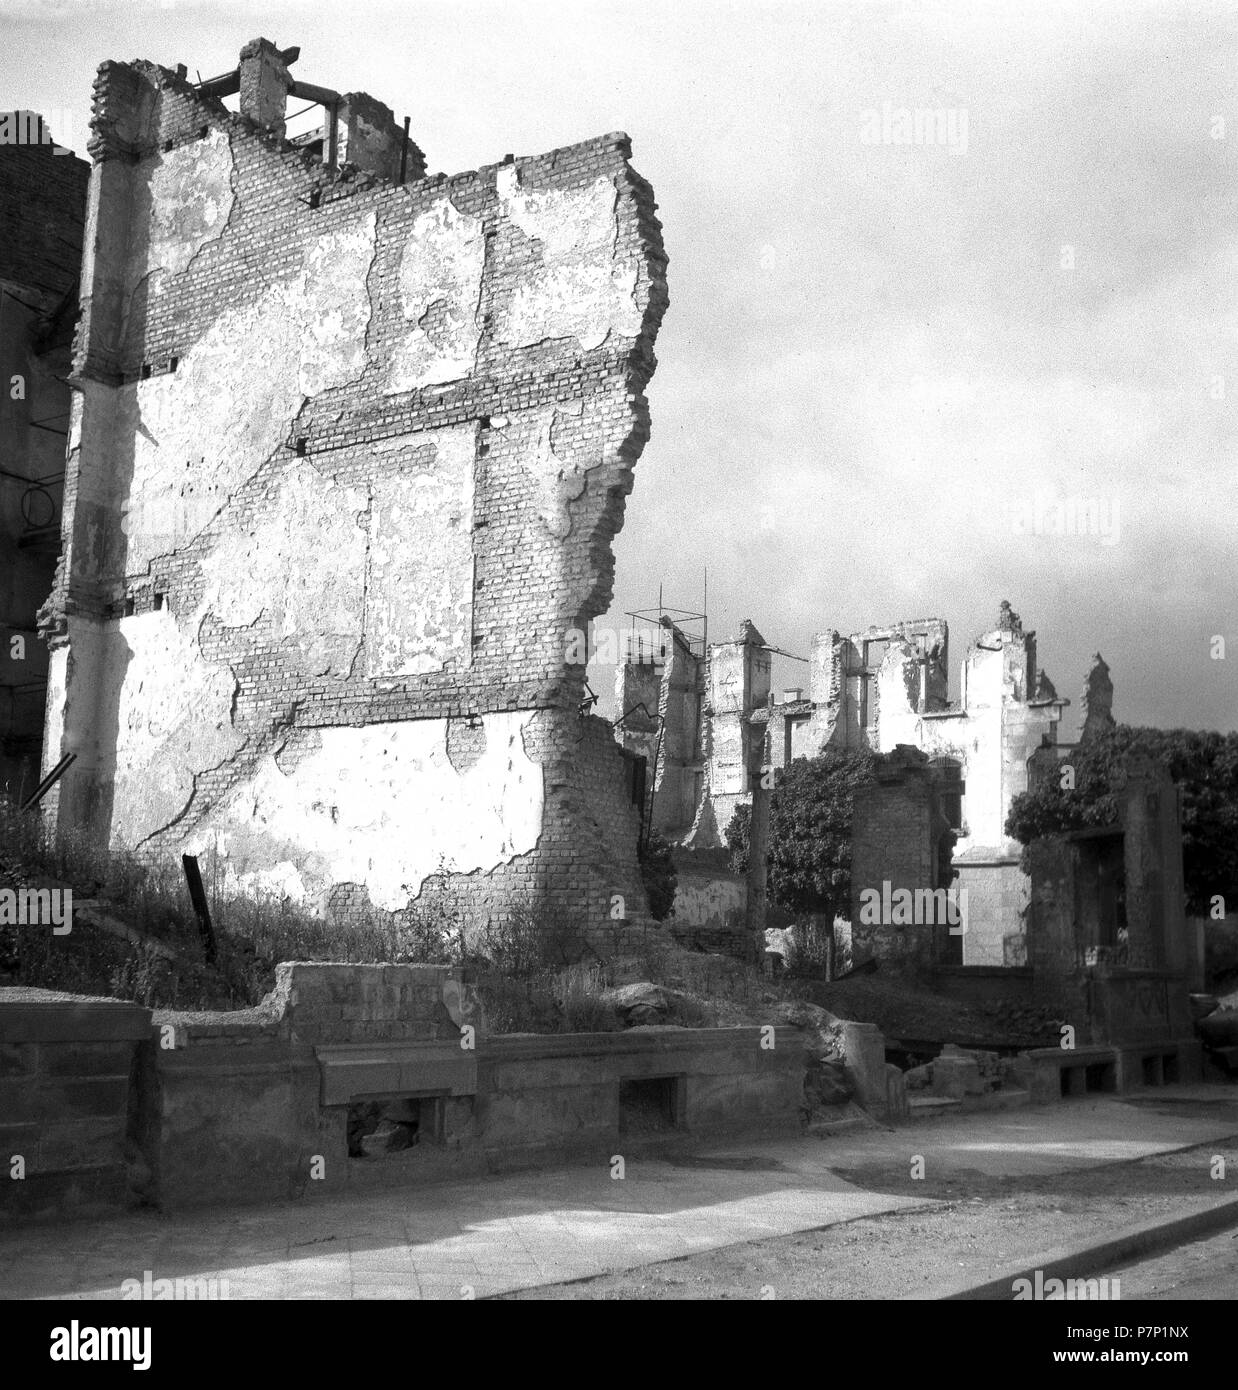 Residential buildings, ruins in Freiburg, ca. 1945, Freiburg, Germany Stock Photo